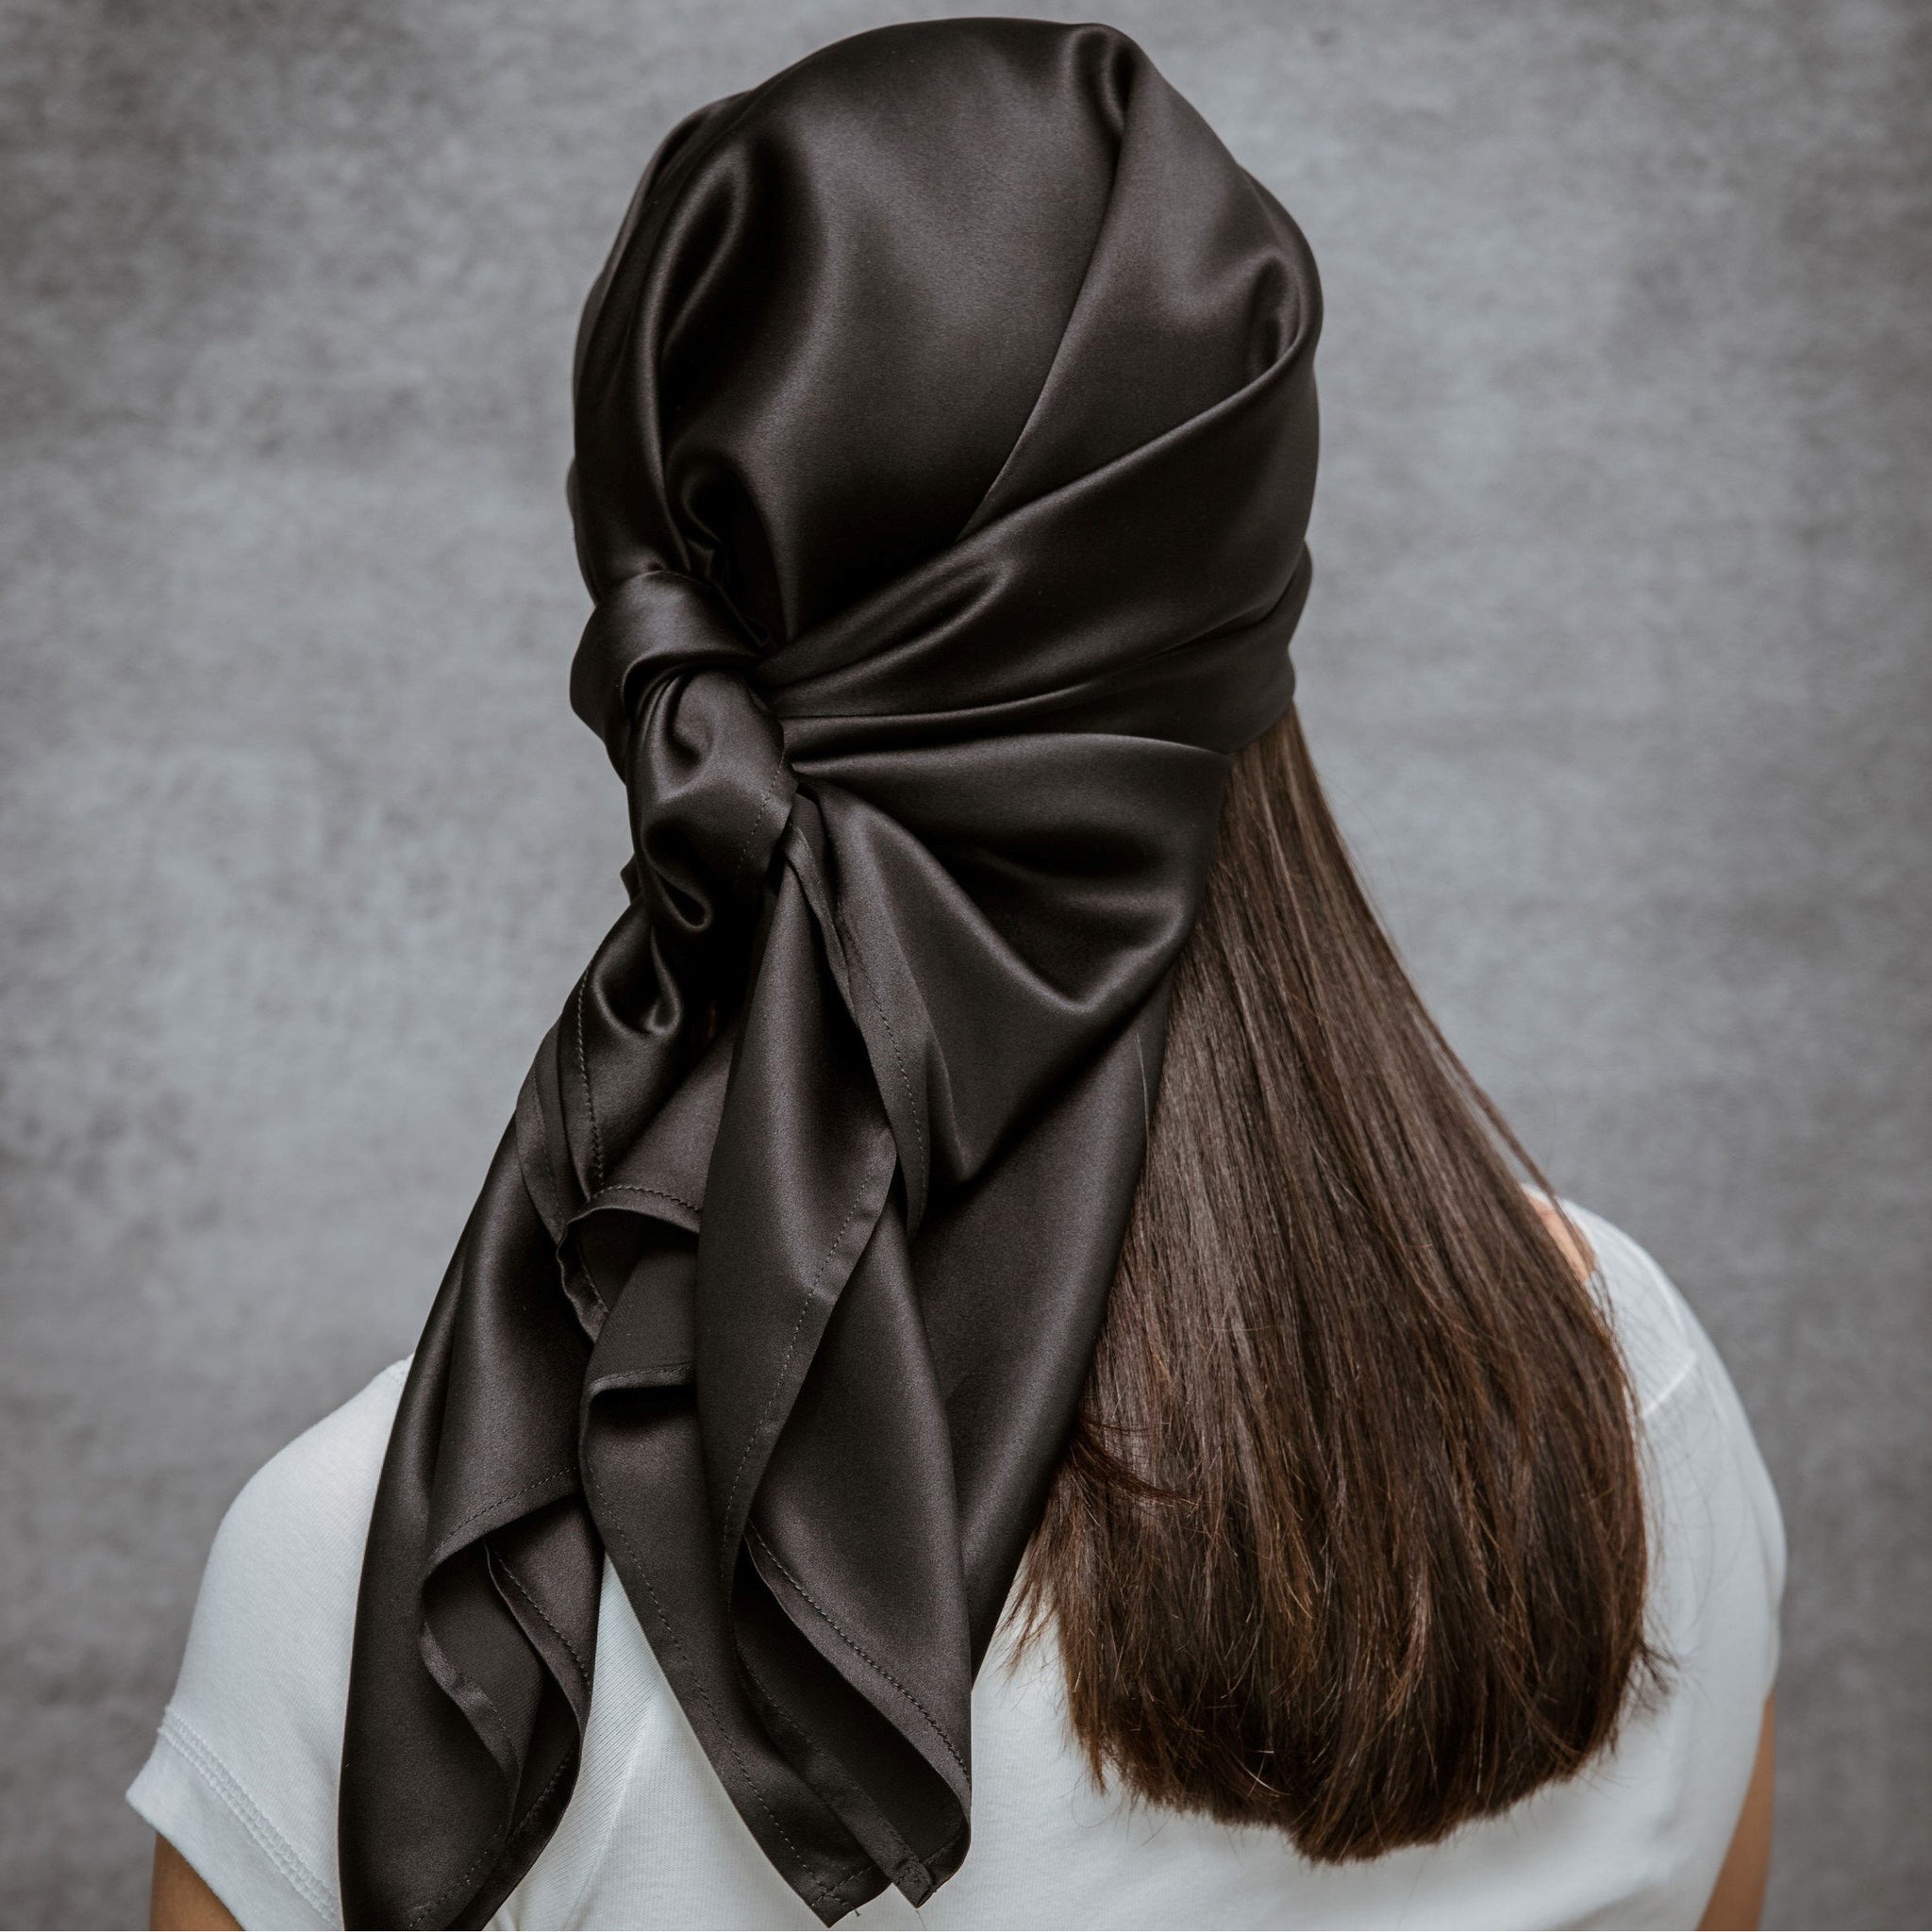 where can i buy a silk head scarf